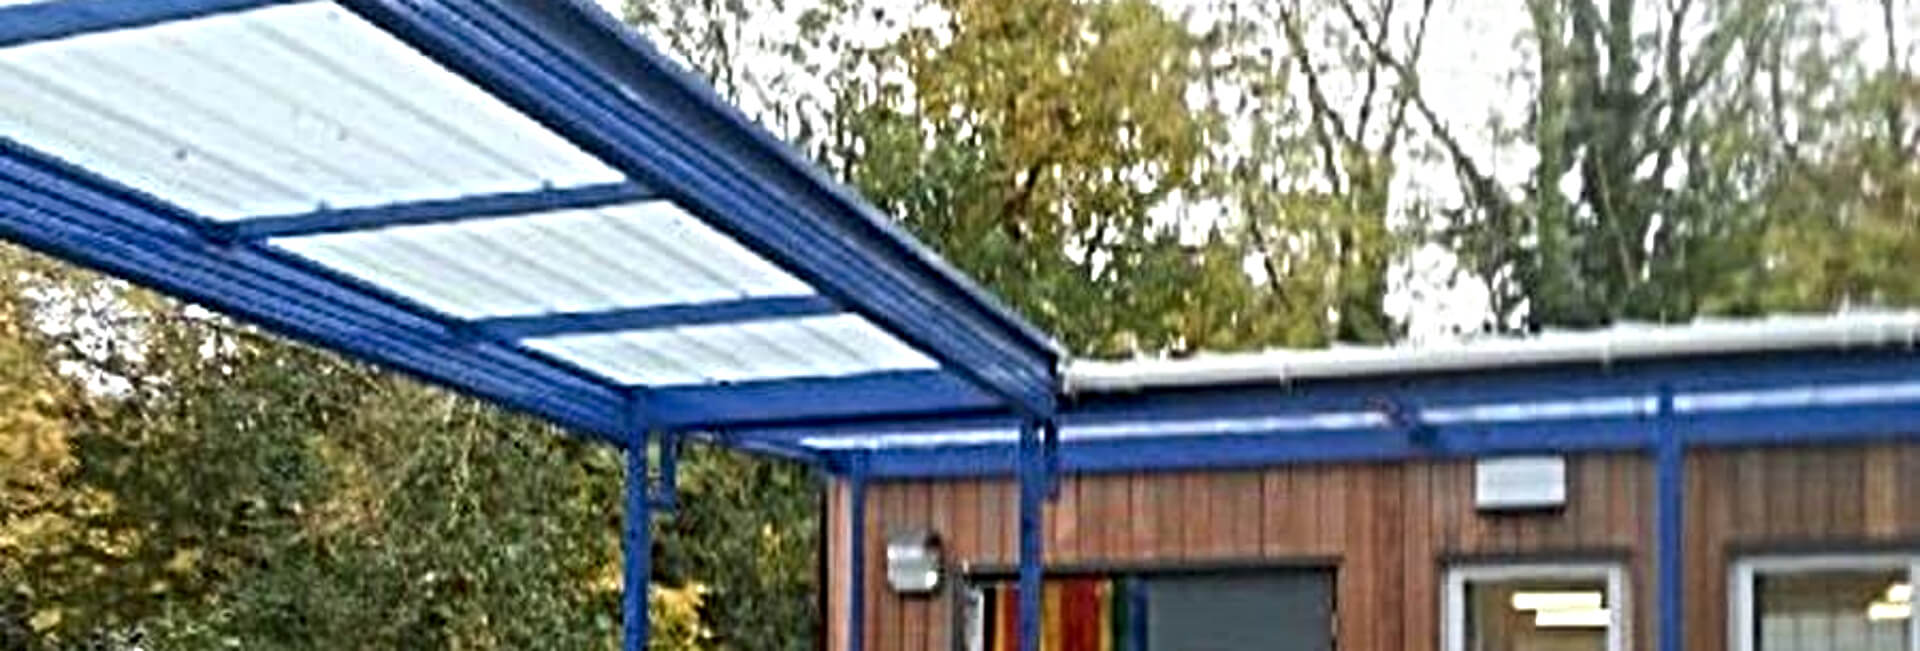 School Shelter in Essex